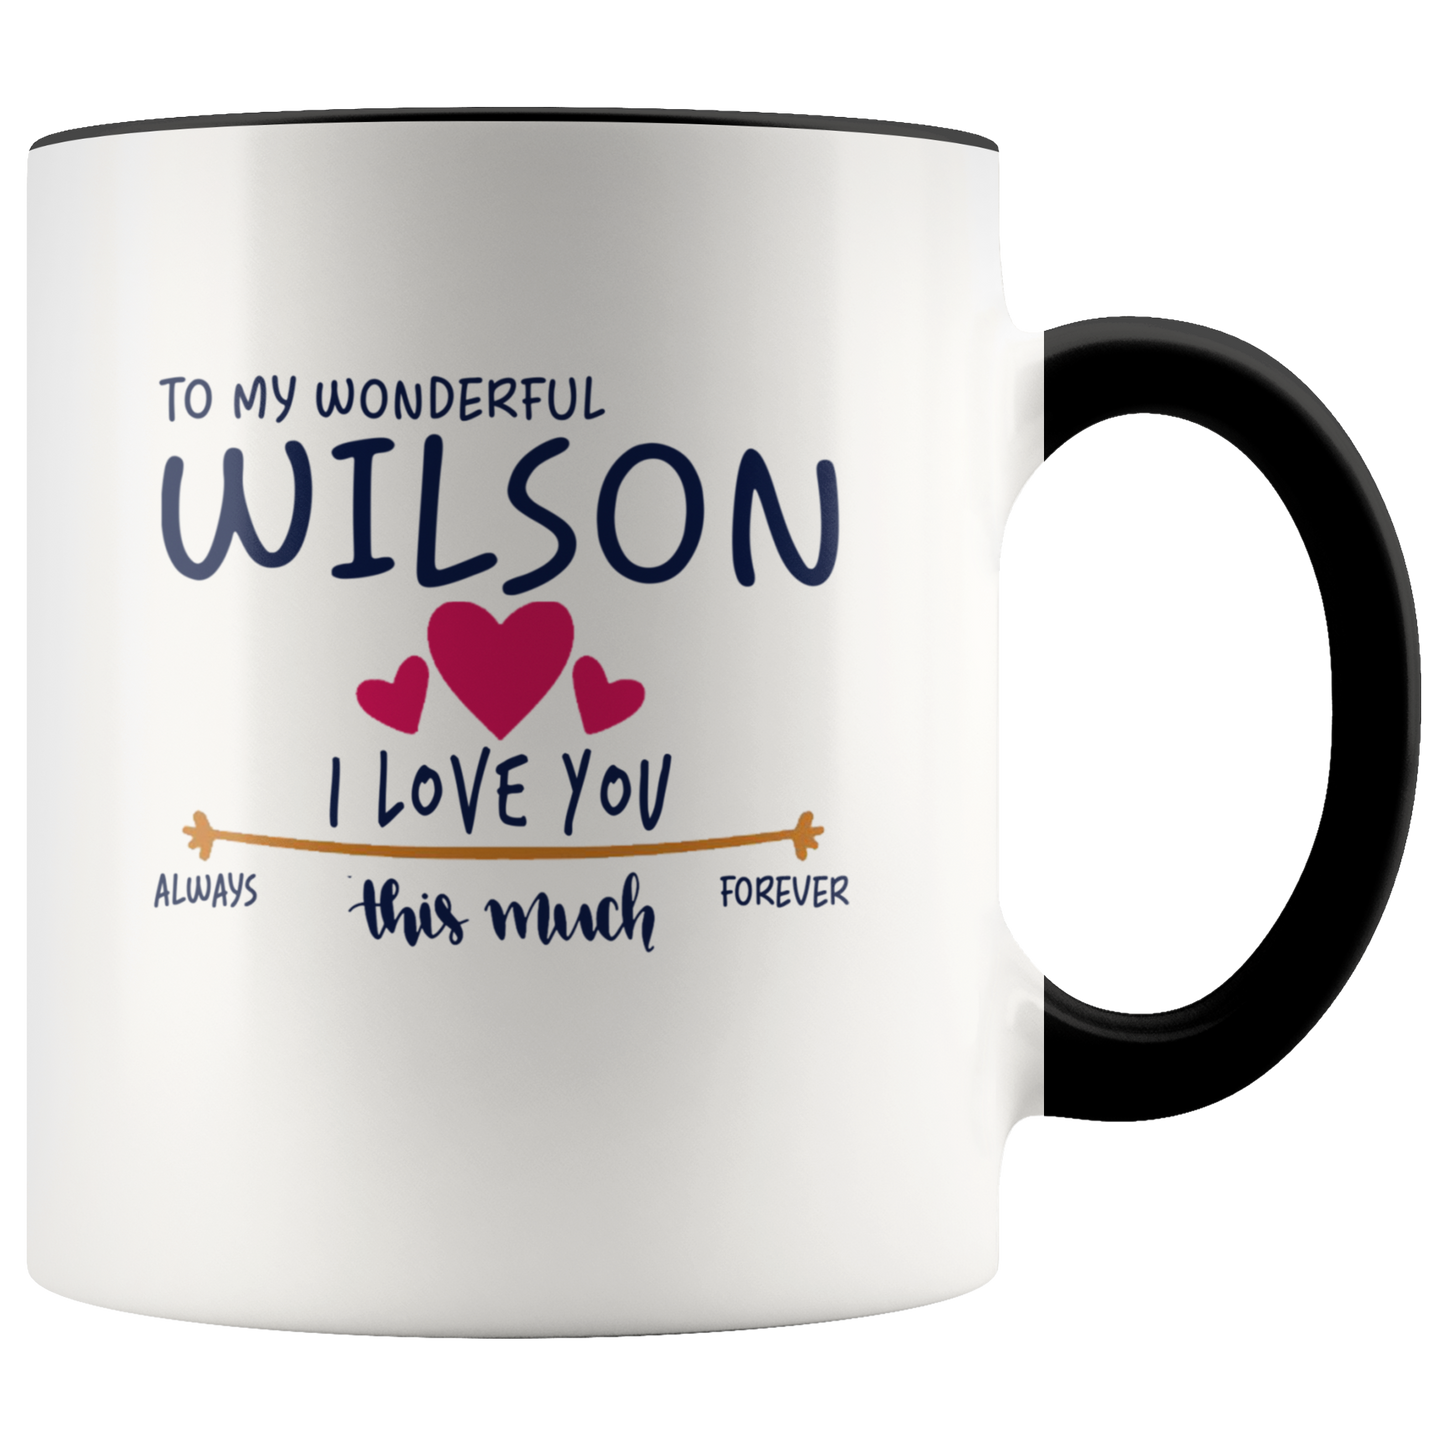 M-21260817-sp-23225 - Valentines Day Coffee Mug With Name Wilson - To My Wonderful